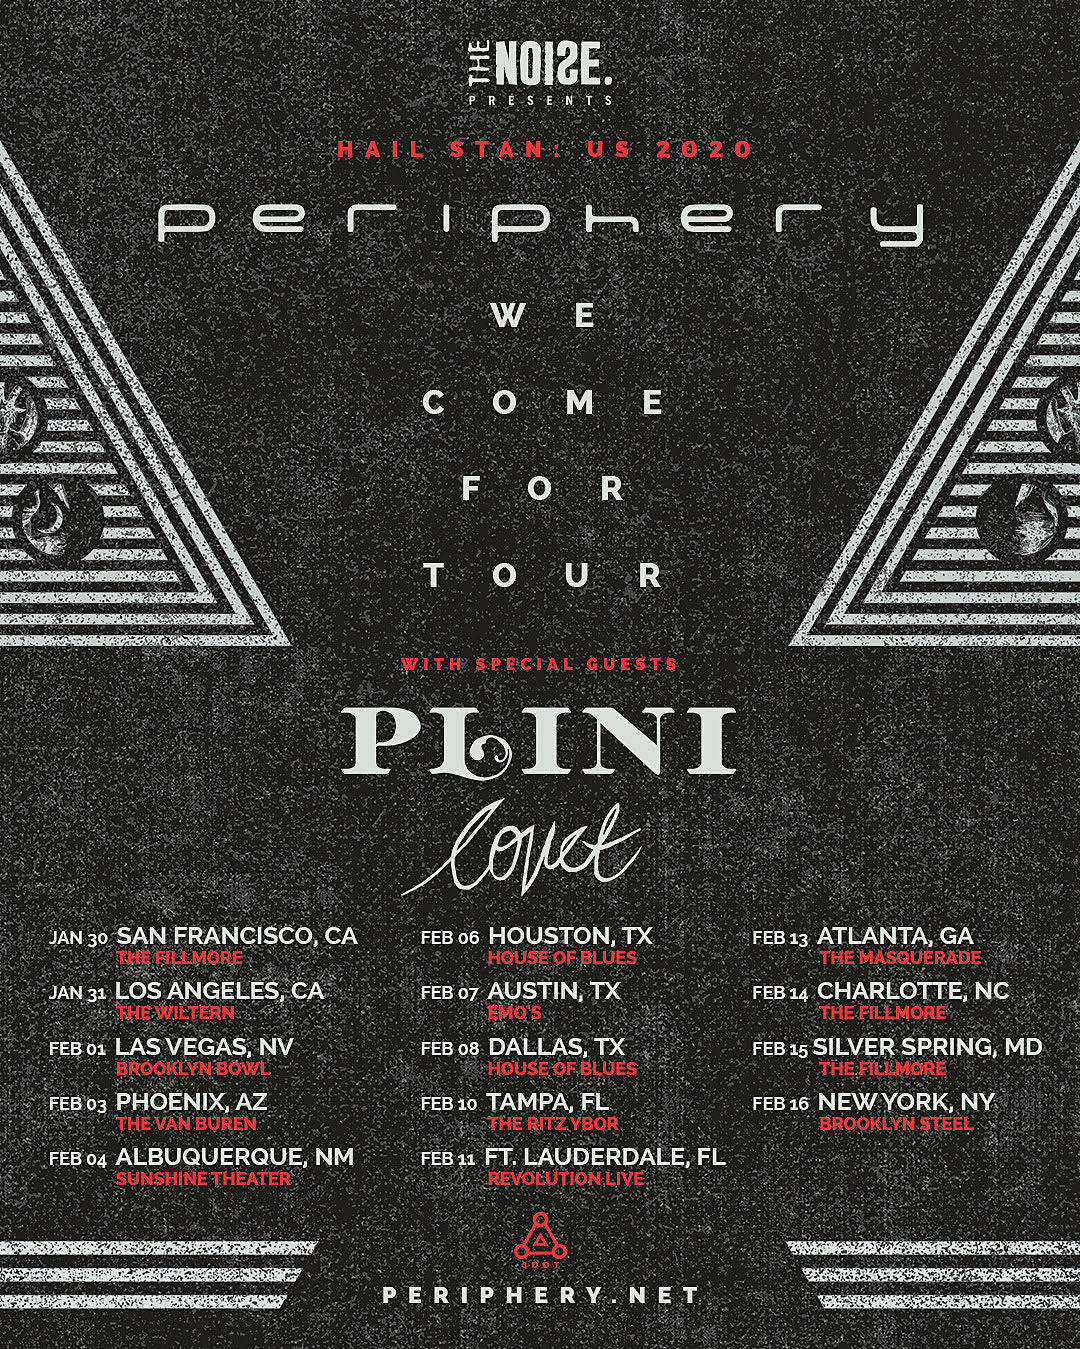 Periphery Extend 'Hail Stan' Tour With 2020 U.S. Dates